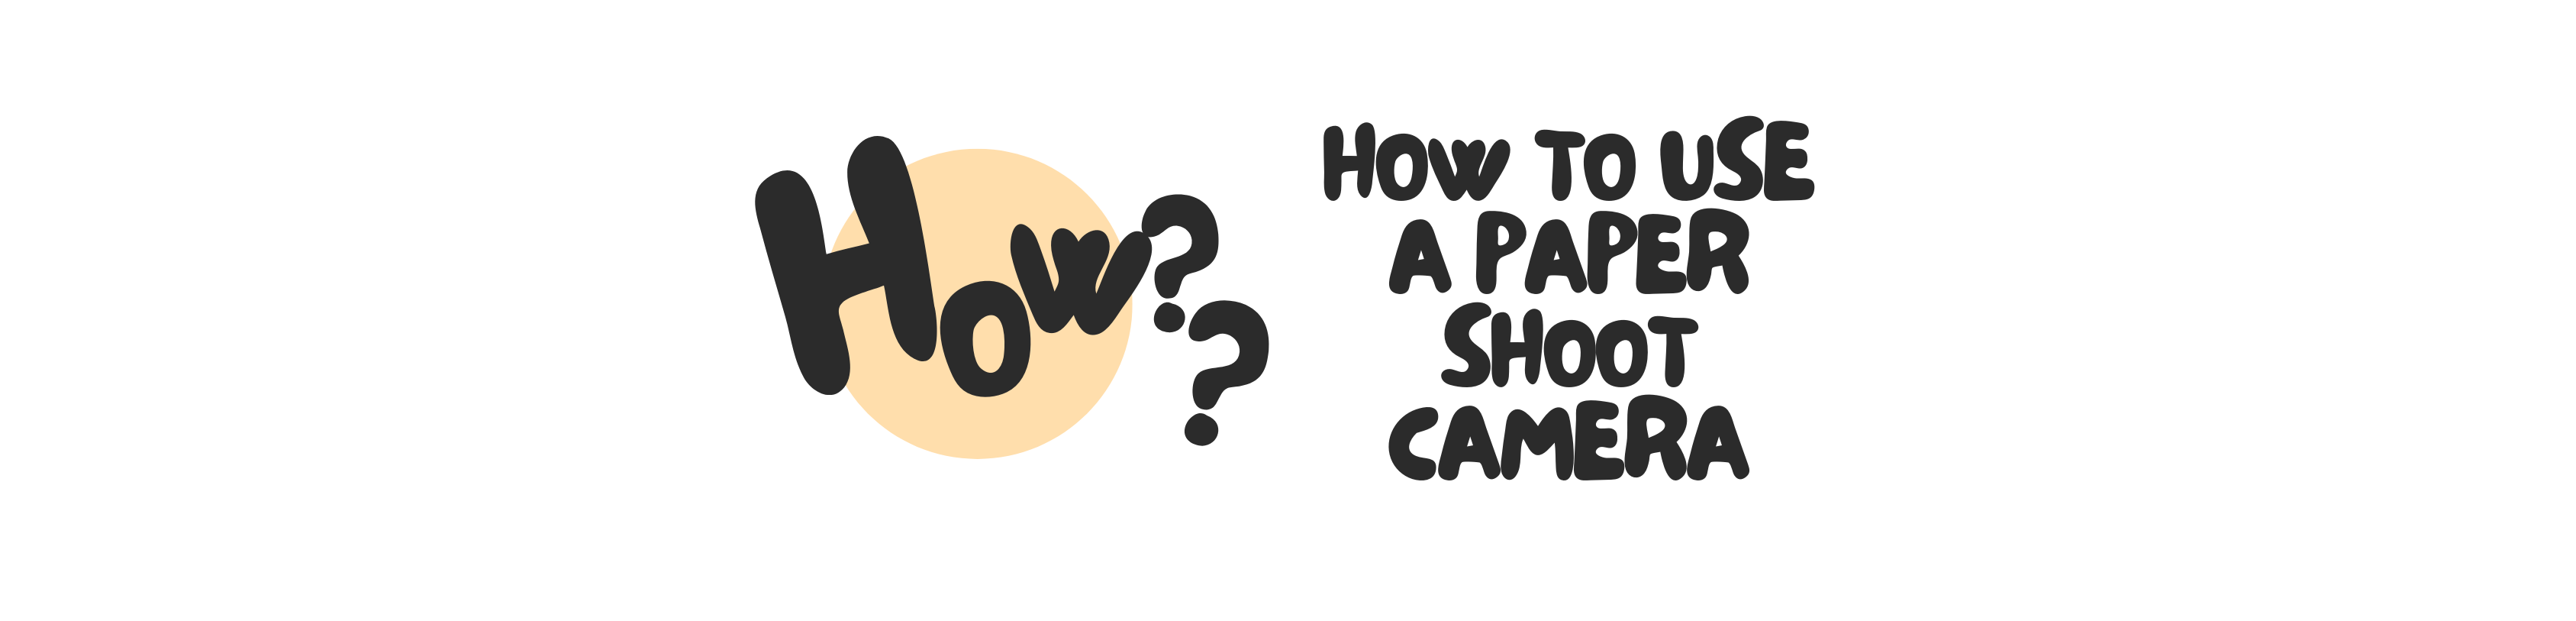 How do I use a Paper Shoot Camera?